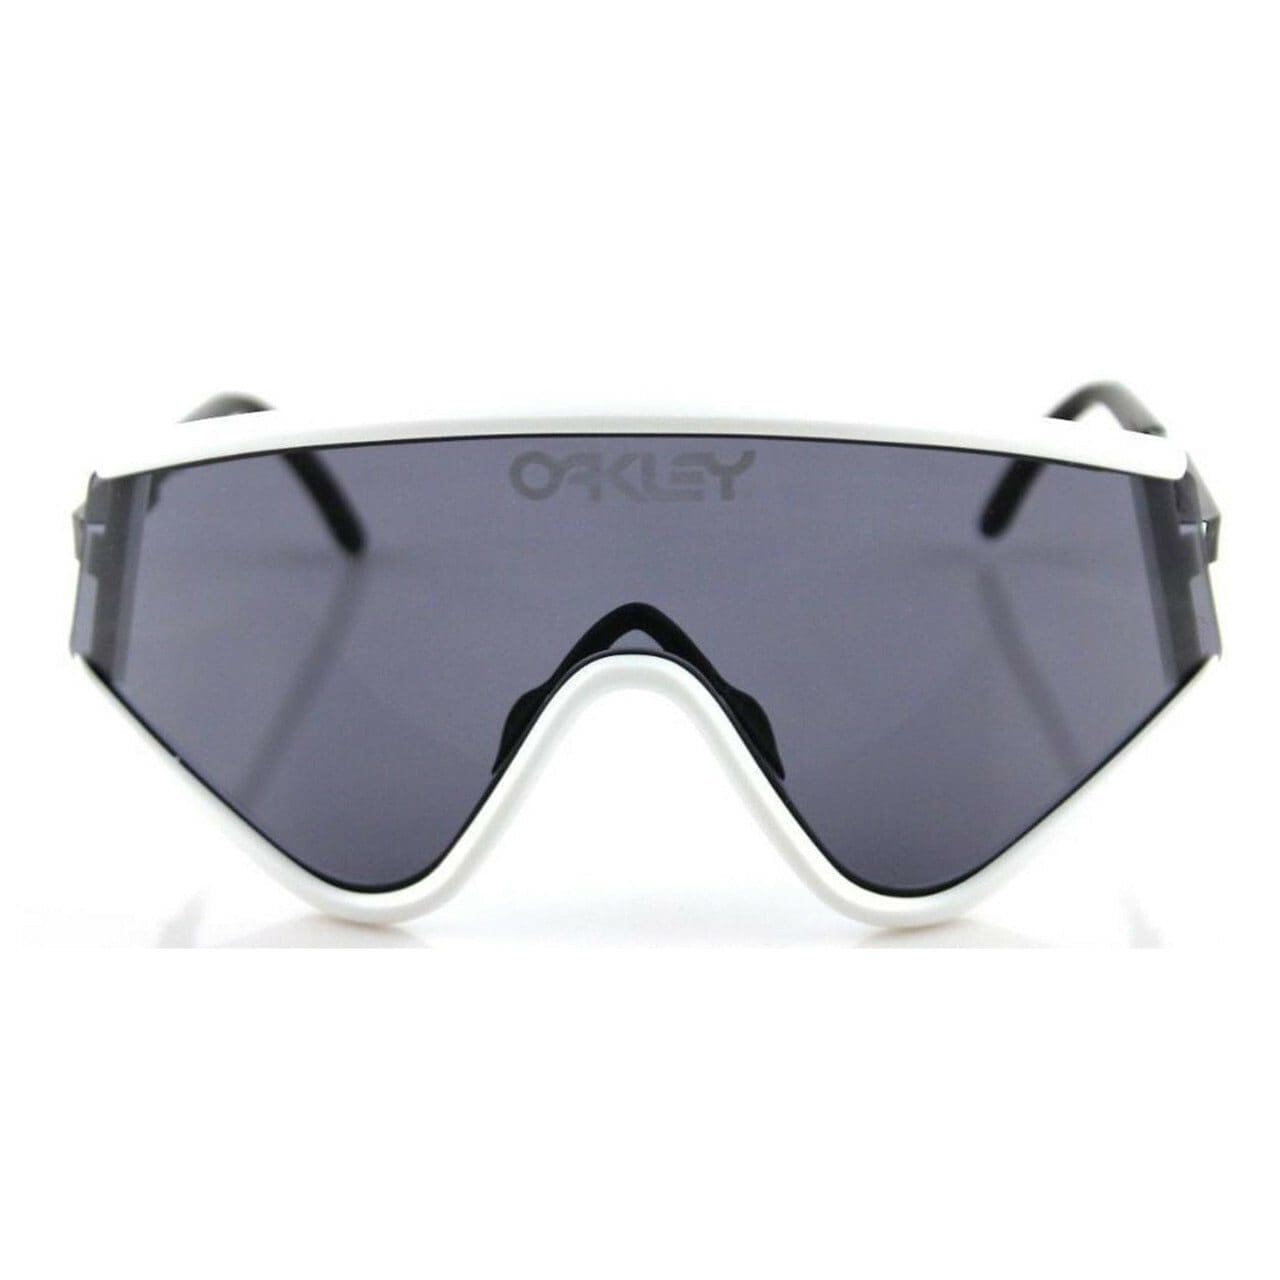 Oakley OO9259-06 Rare Razor Blades Heritage Collection White Radarlock Sunglasses Frames 888392005809